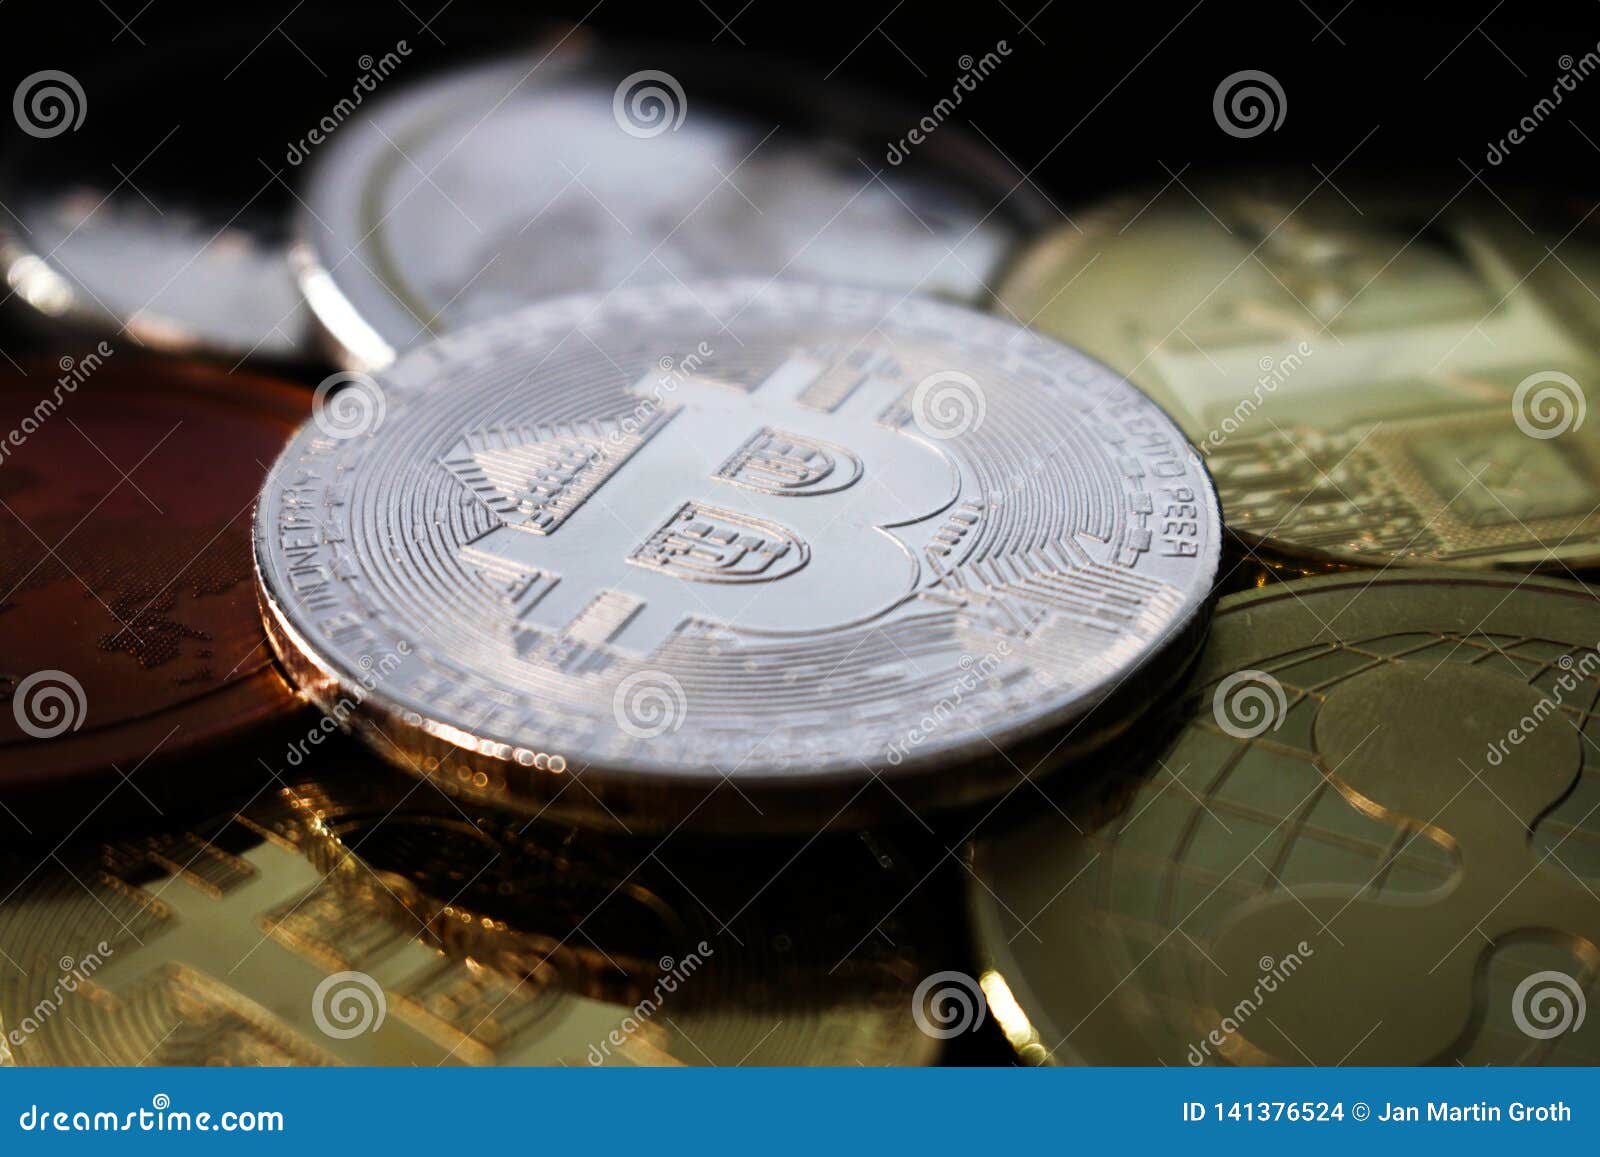 upcoming coins on crypto.com